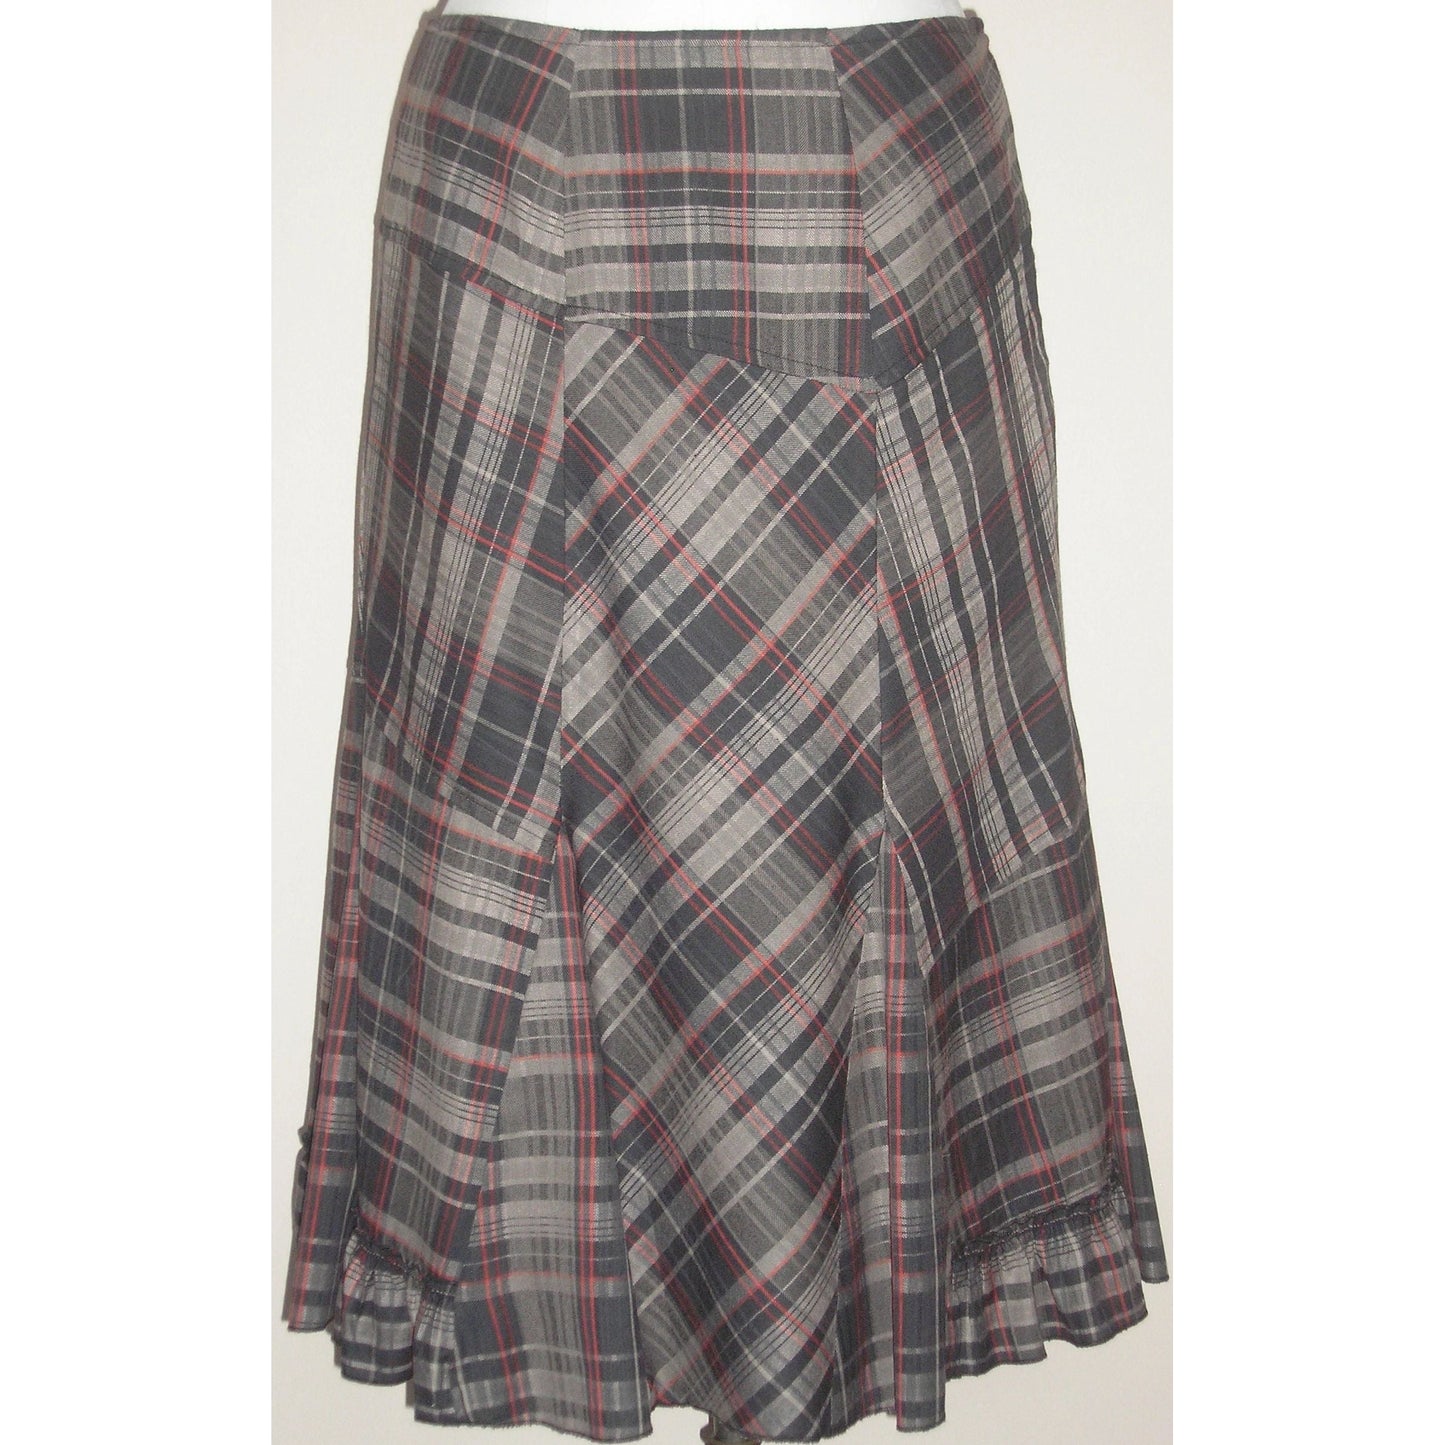 Adini USA Multi-Color Plaid Fit and Flare Skirt